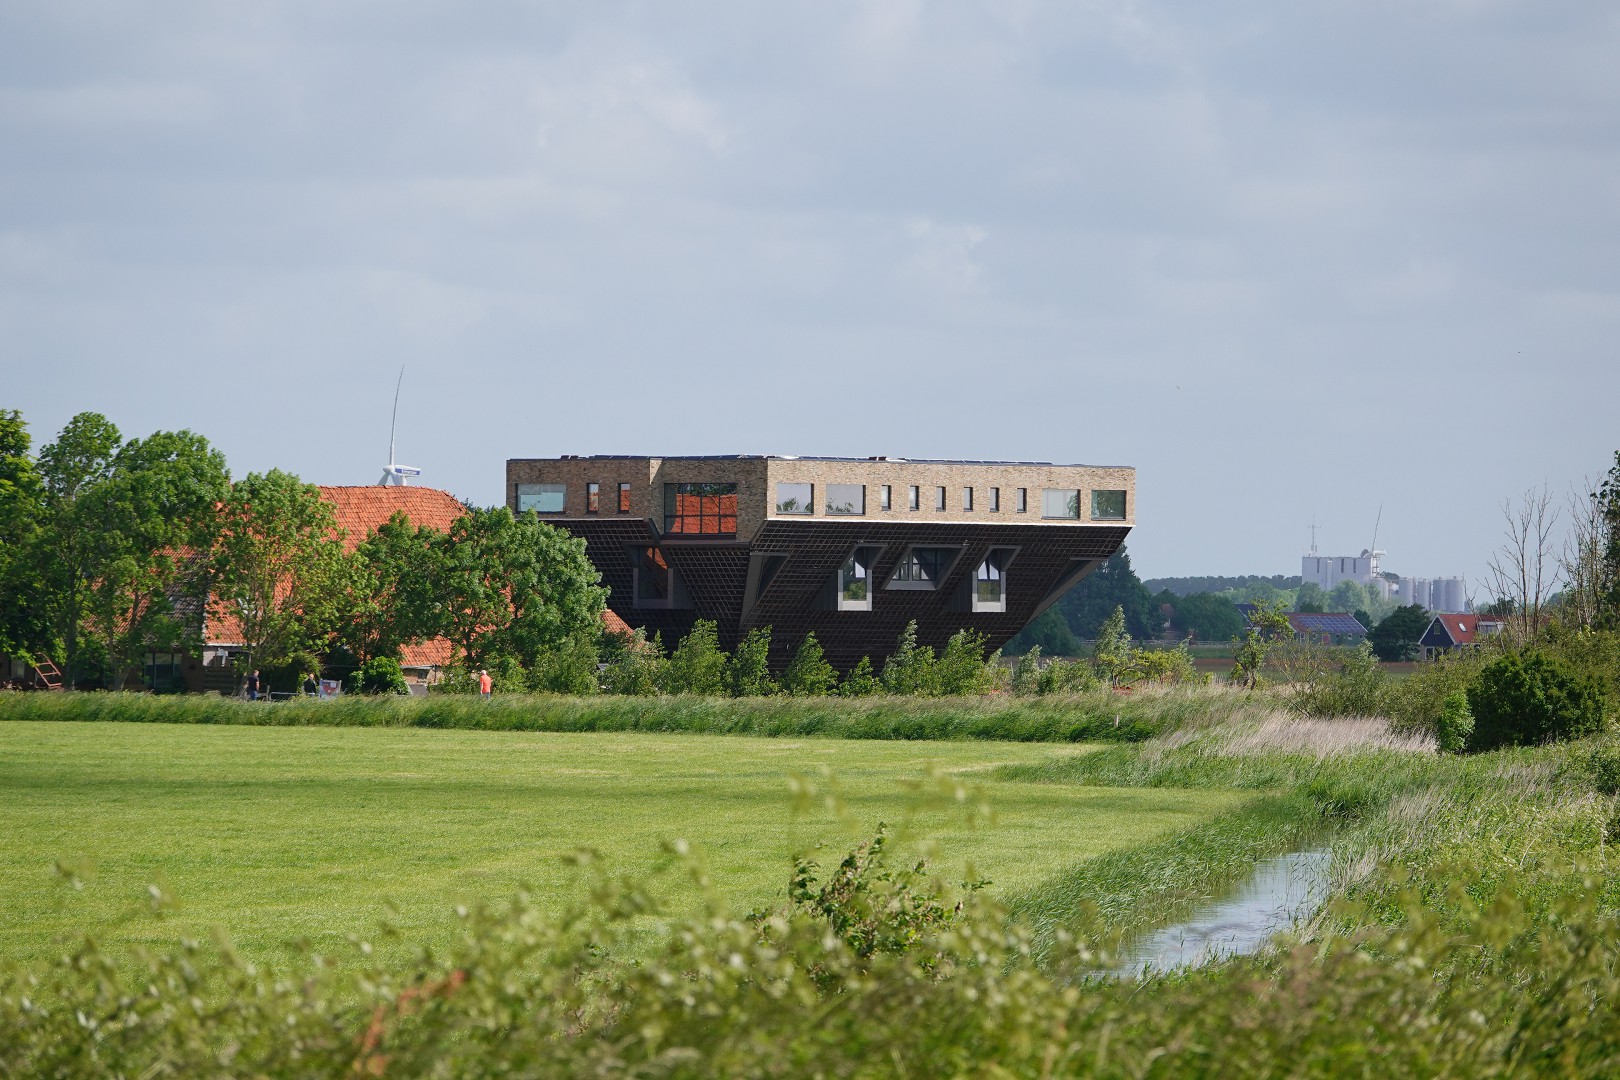 Friesland Waterland - Huis op de kop (tele)